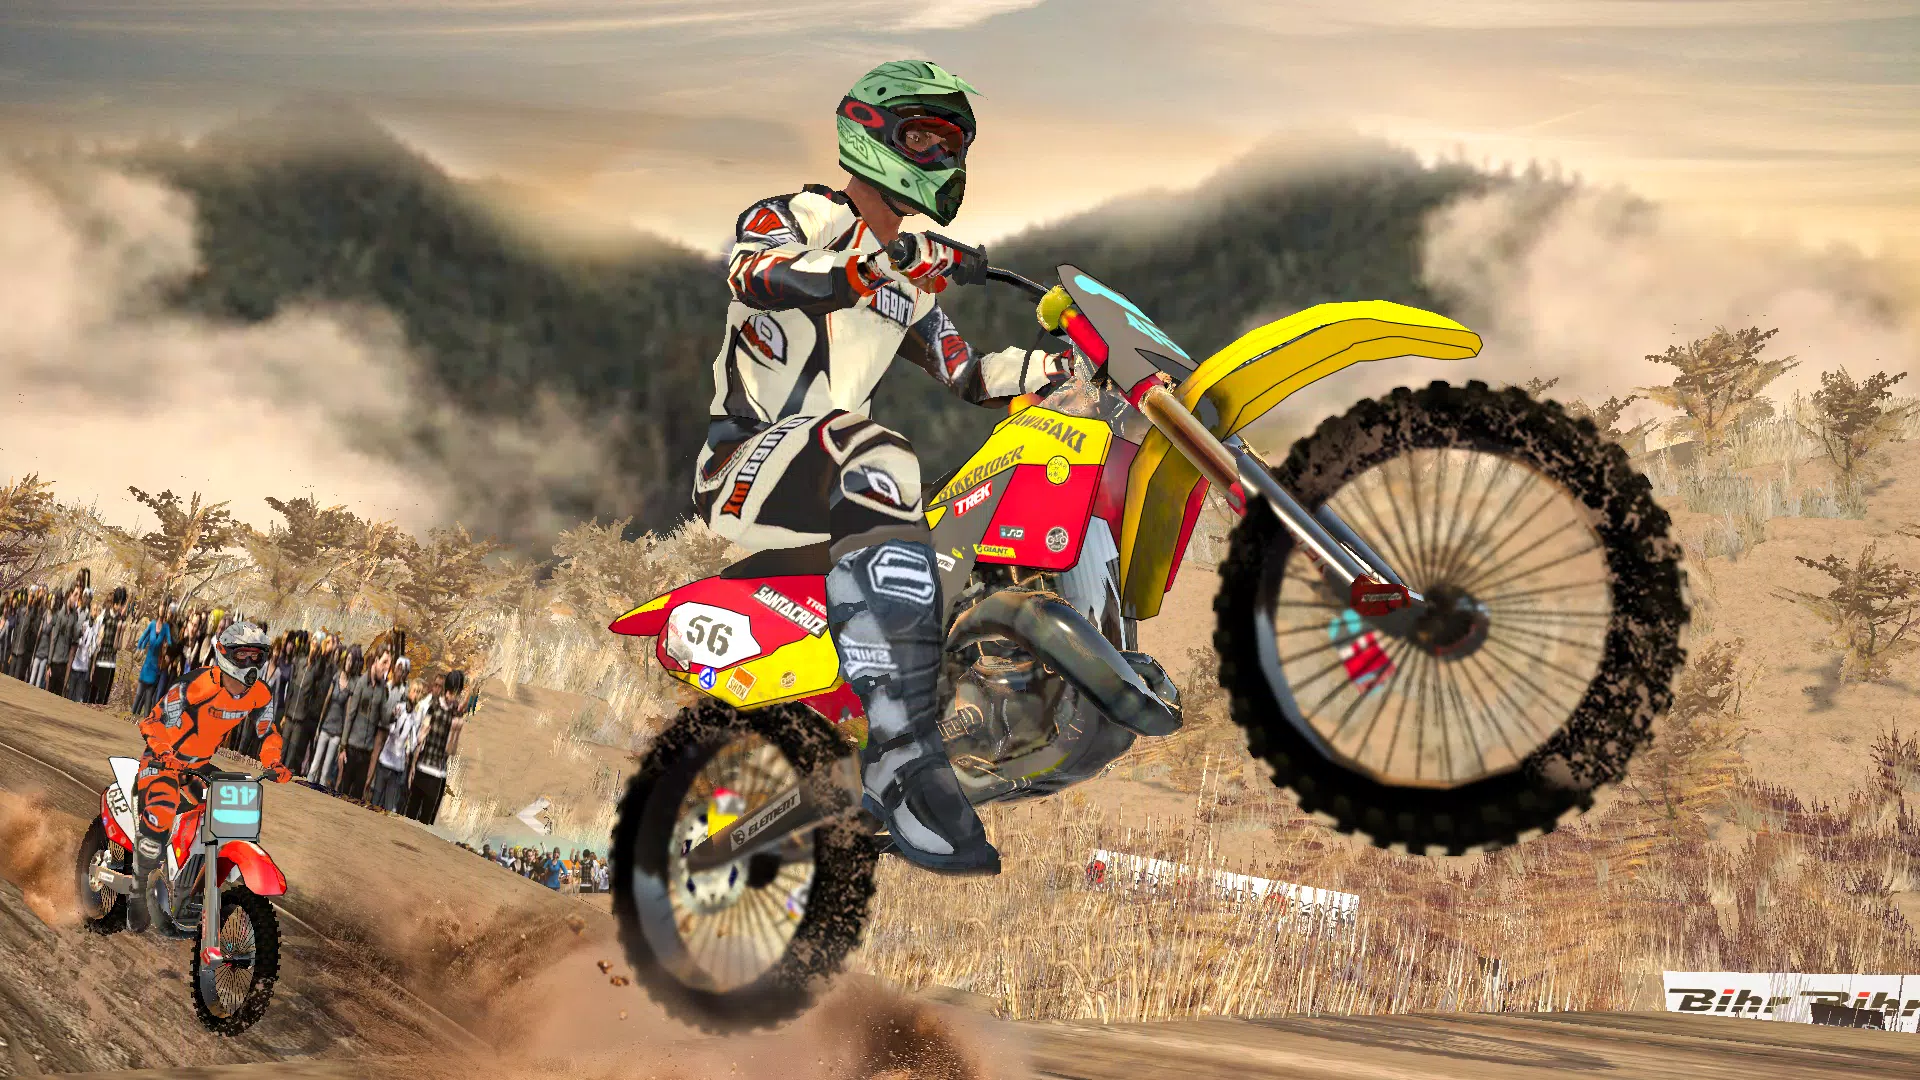 Moto Dirt Bike Motocross Games for Android - APK Download